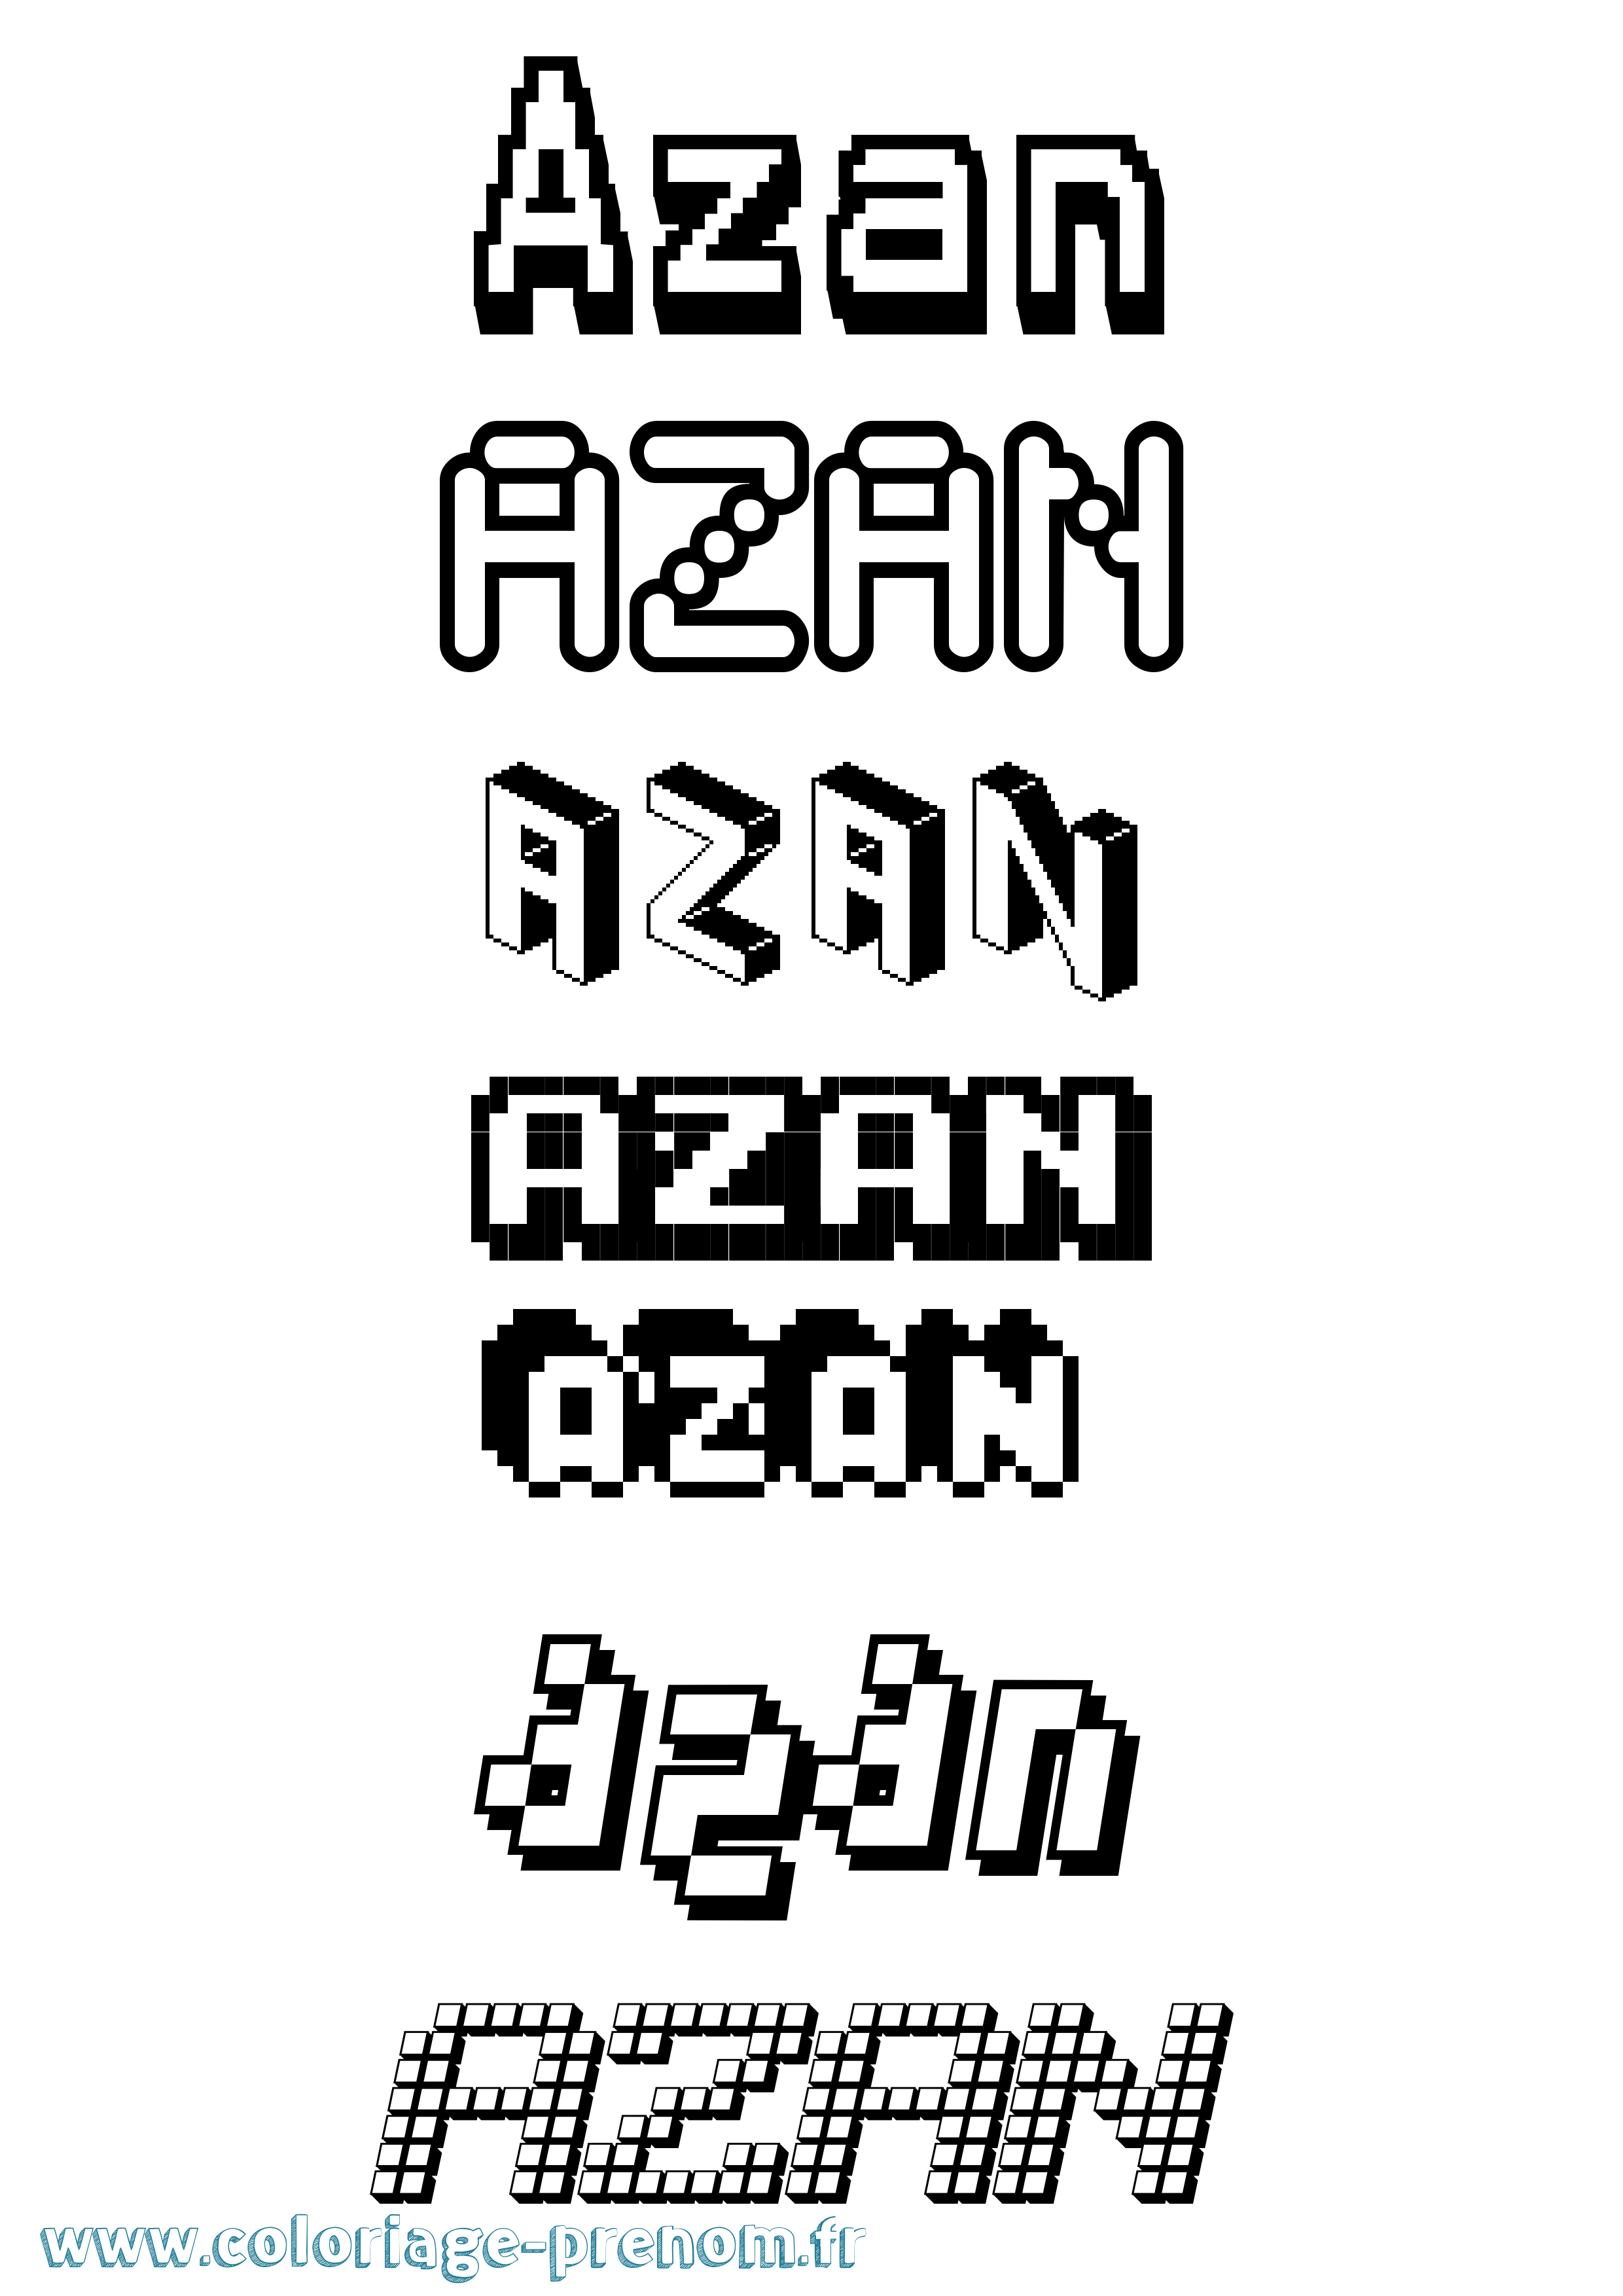 Coloriage prénom Azan Pixel